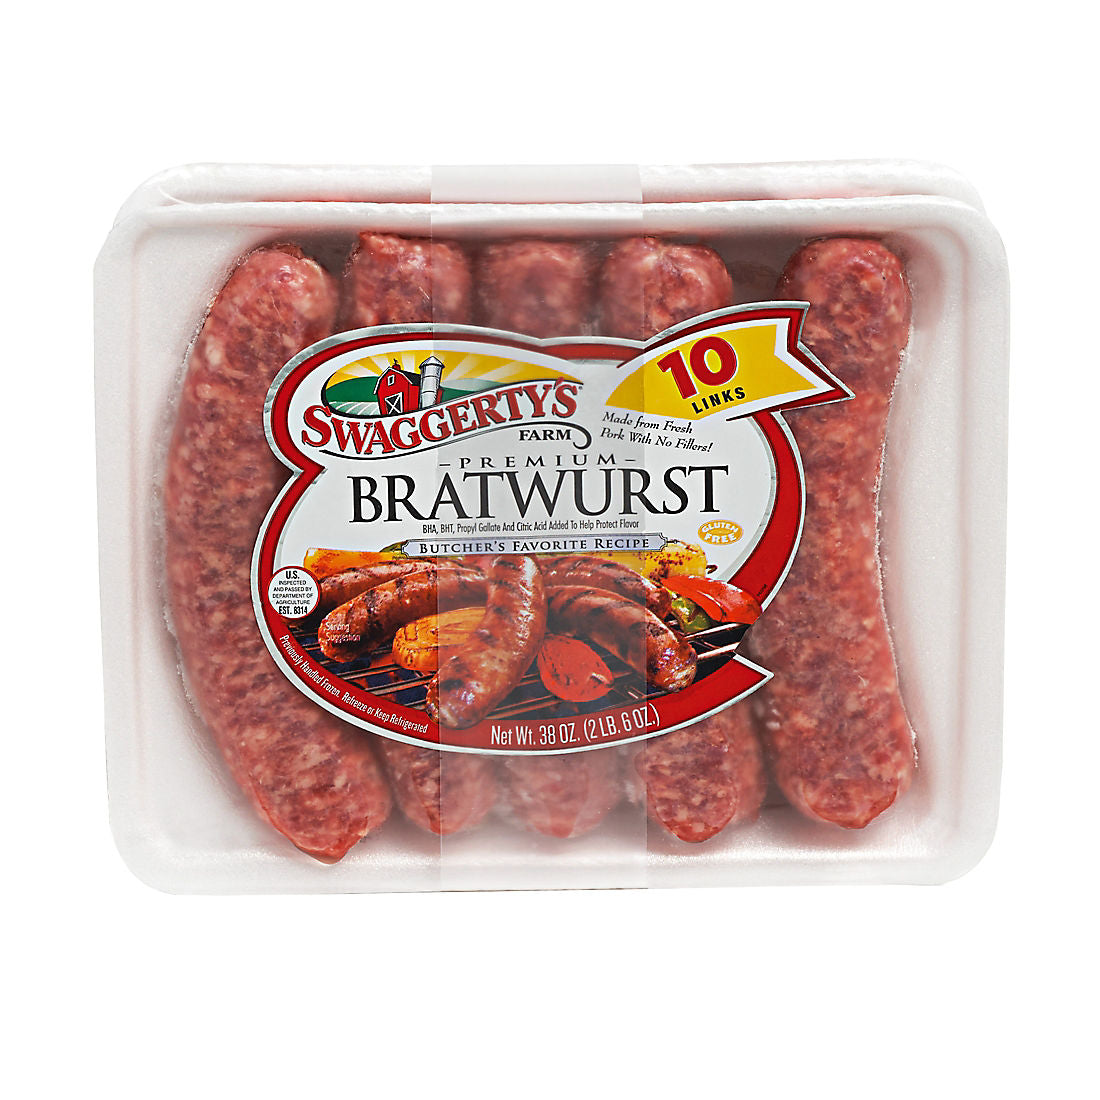 Swaggerty's Farm Bratwurst Links, 10 ct.